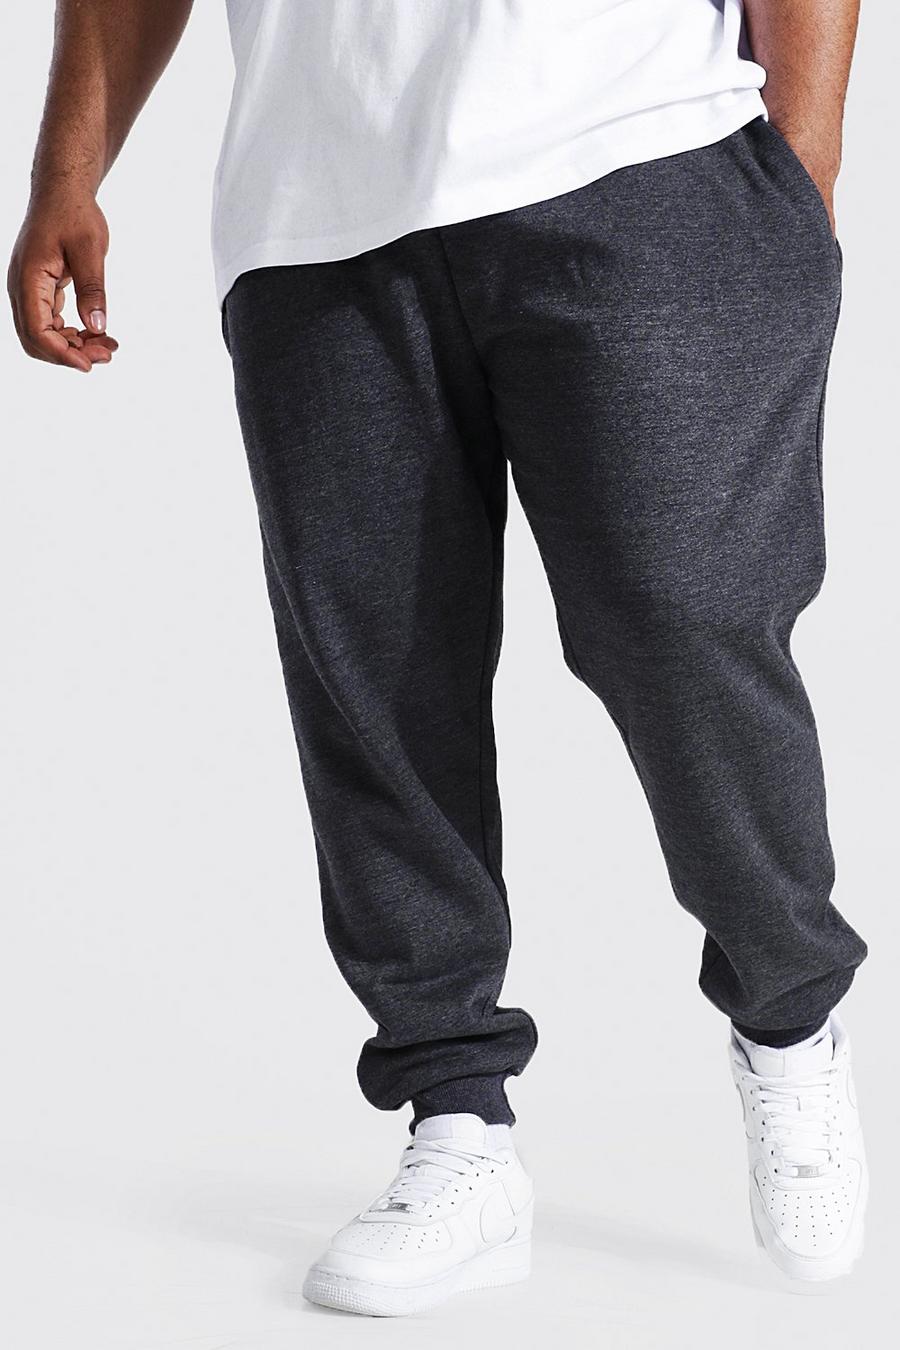 Pantalón deportivo Plus ajustado reciclado, Charcoal gris image number 1